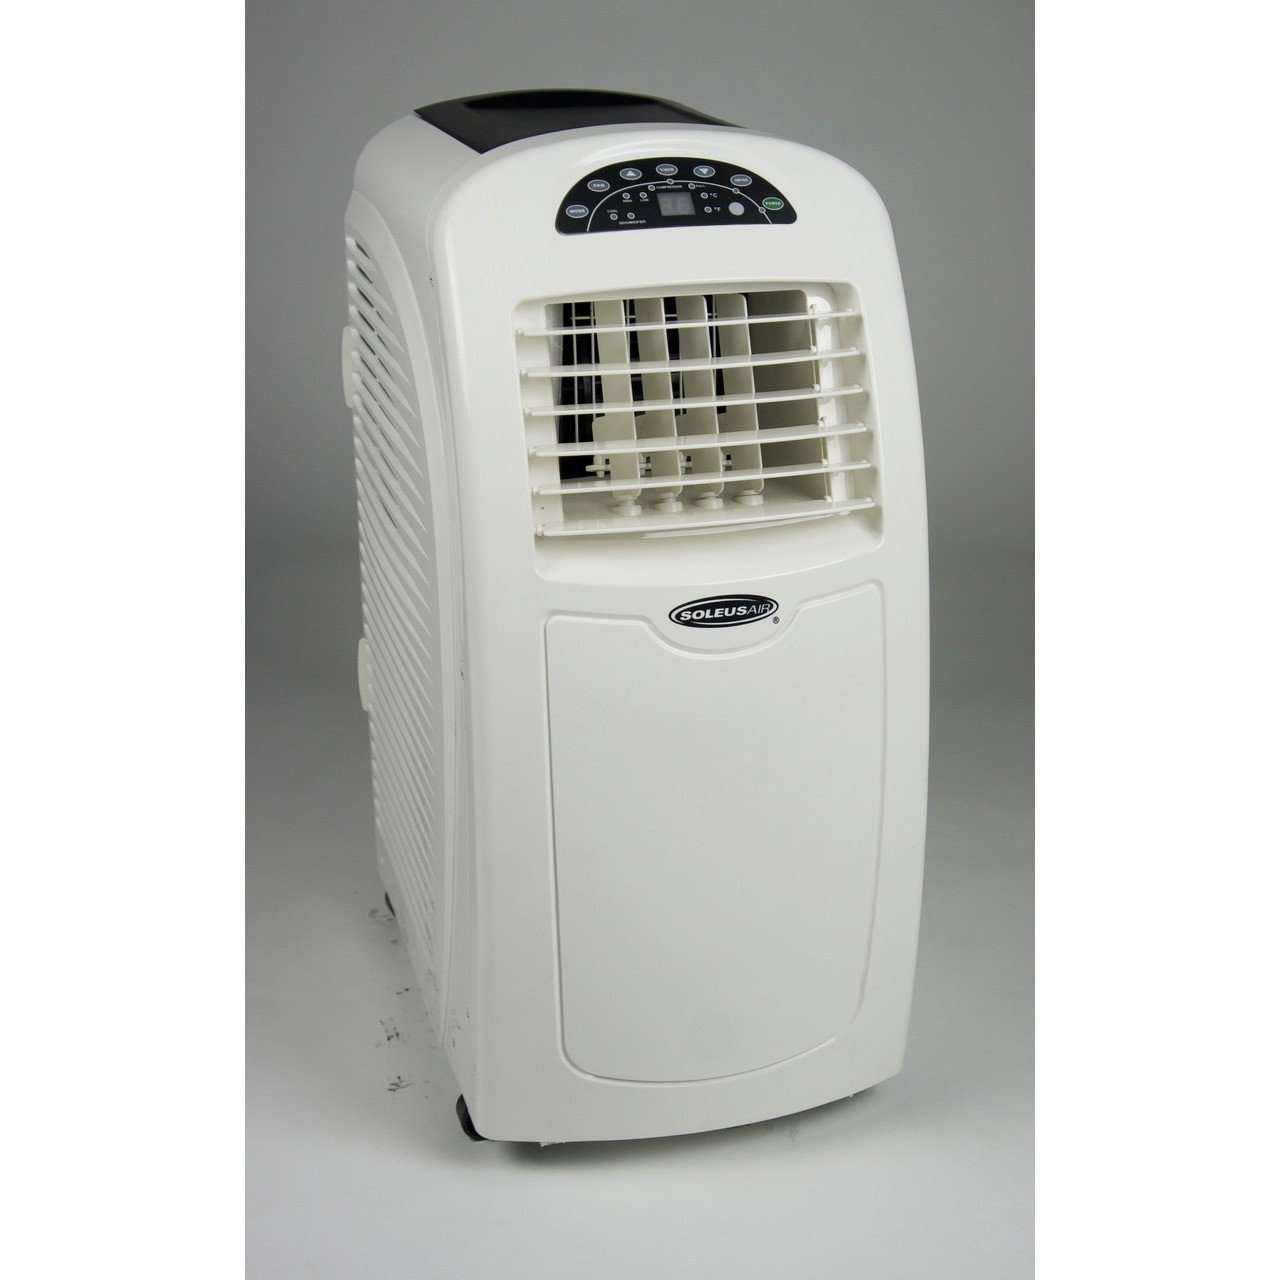 Soleus Air, Soleus Air KY-100 Portable Air Conditioner and Dehumidifier